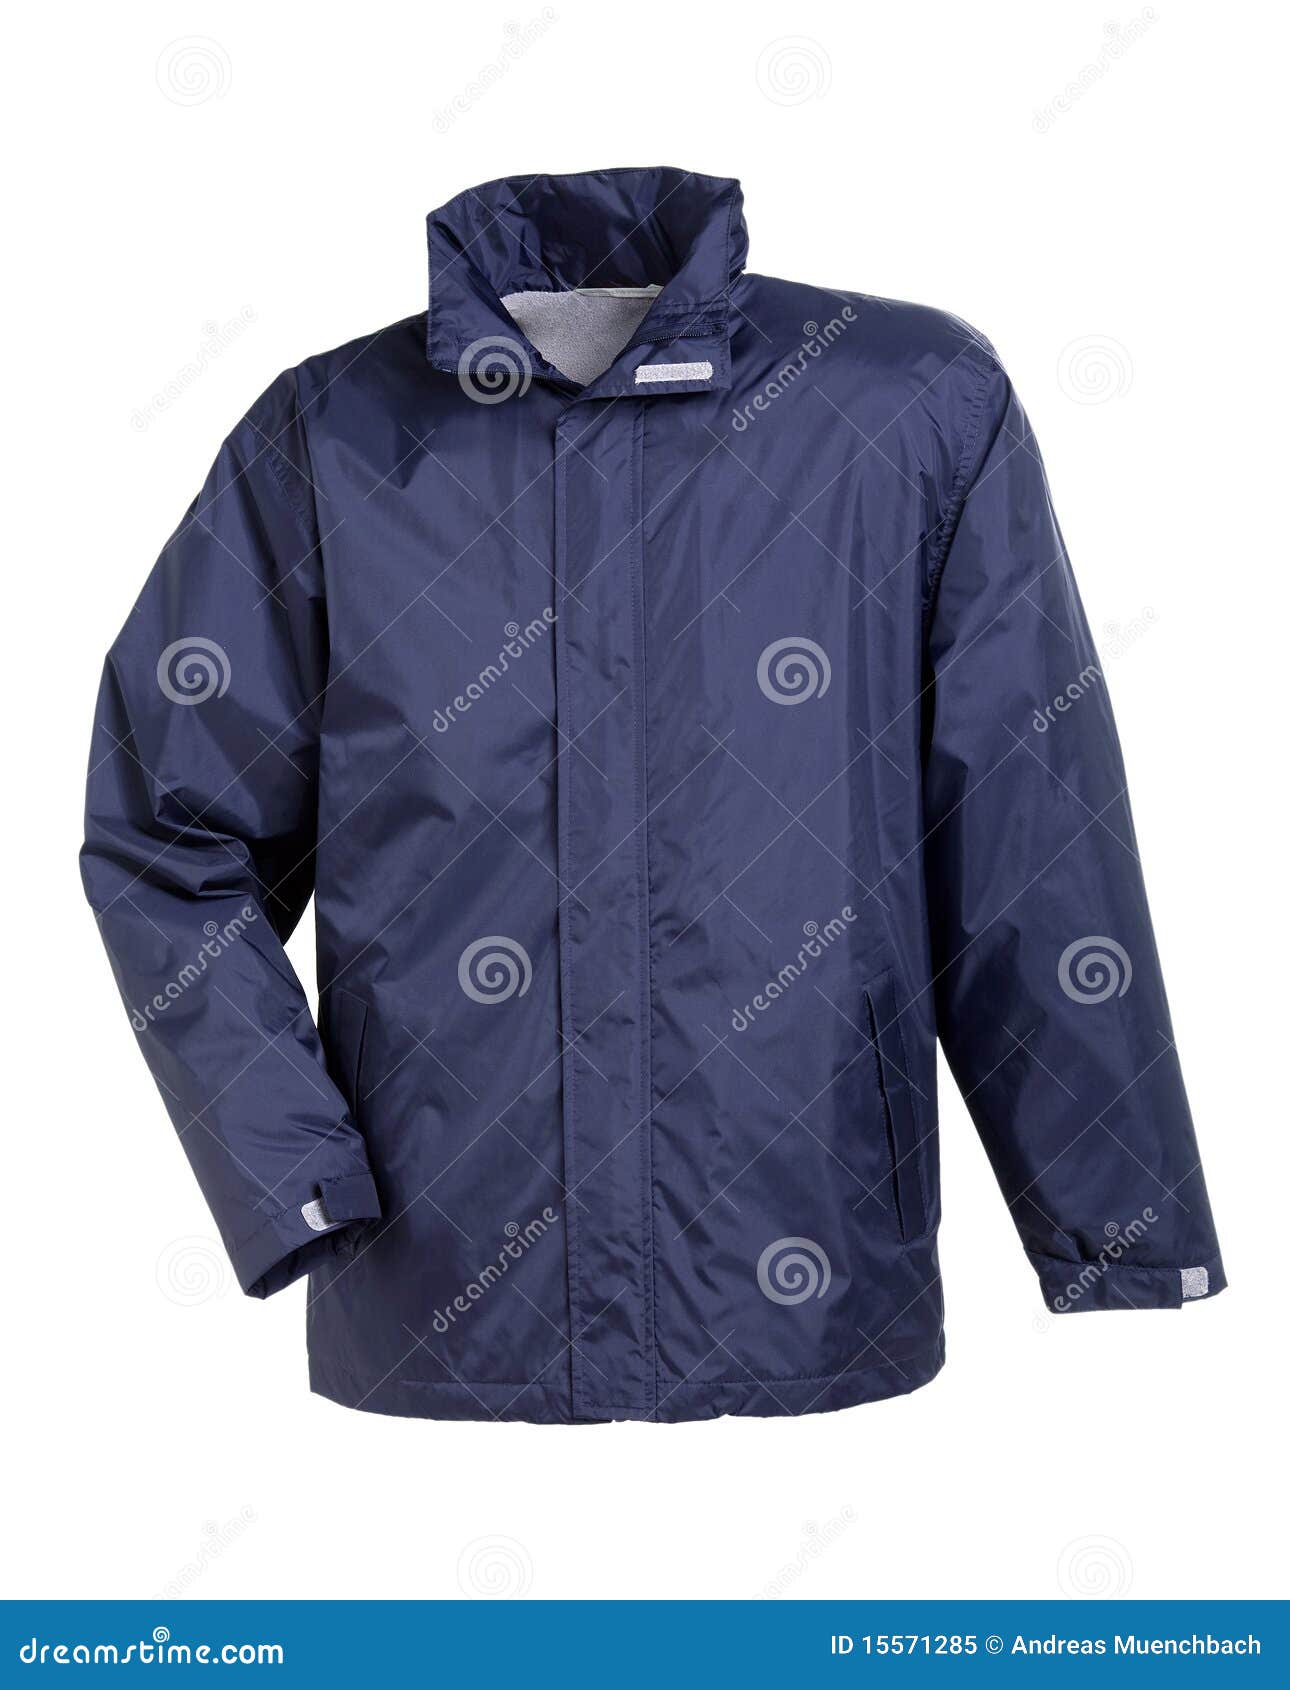 blue rain jacket